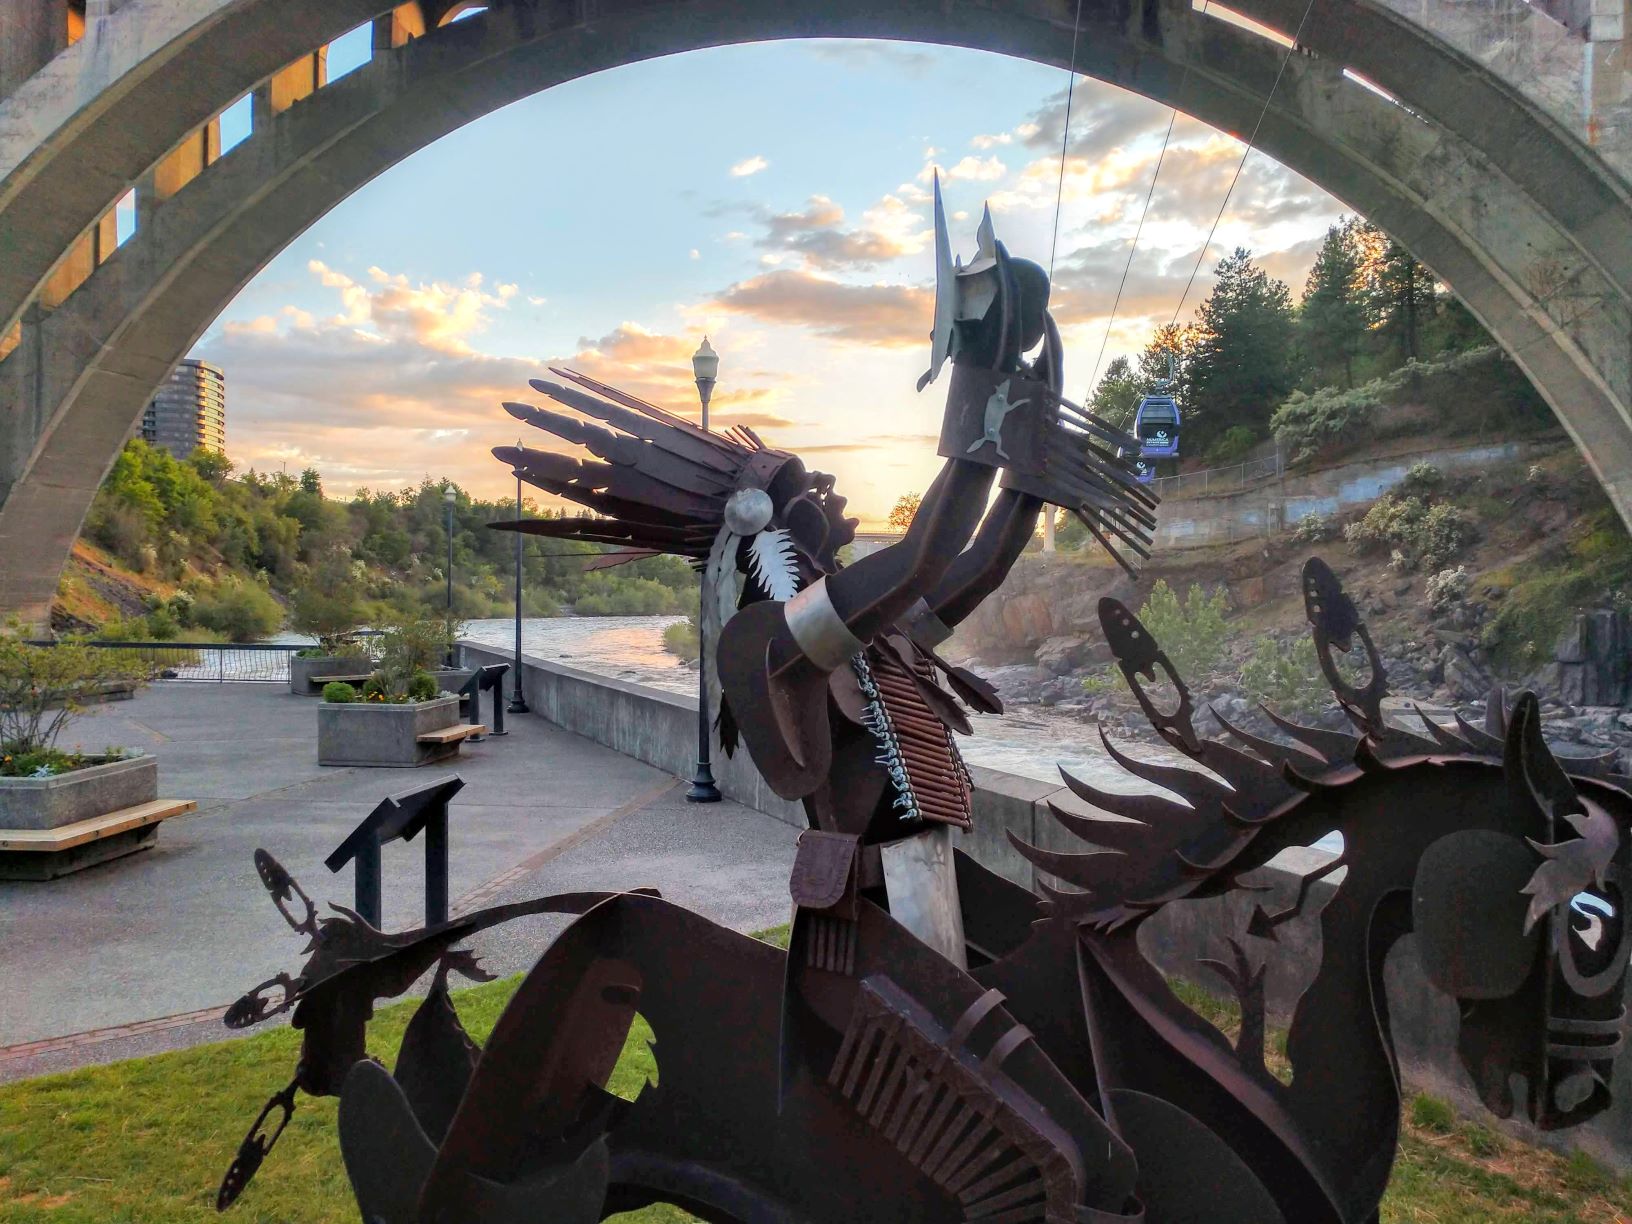 A native American metal sculpture.